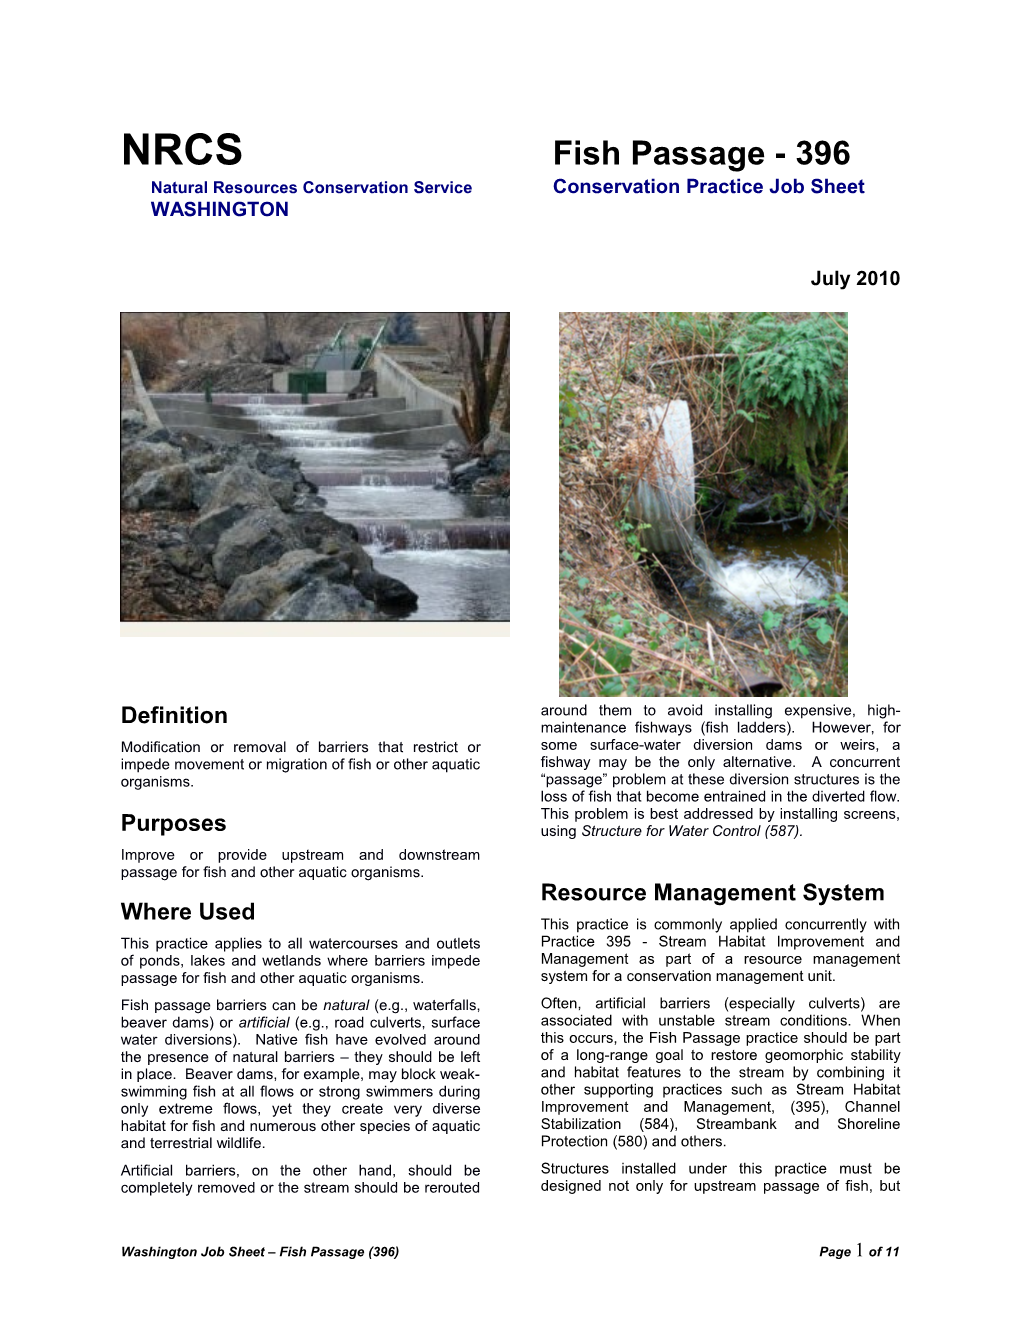 Natural Resources Conservation Serviceconservation Practice Job Sheet